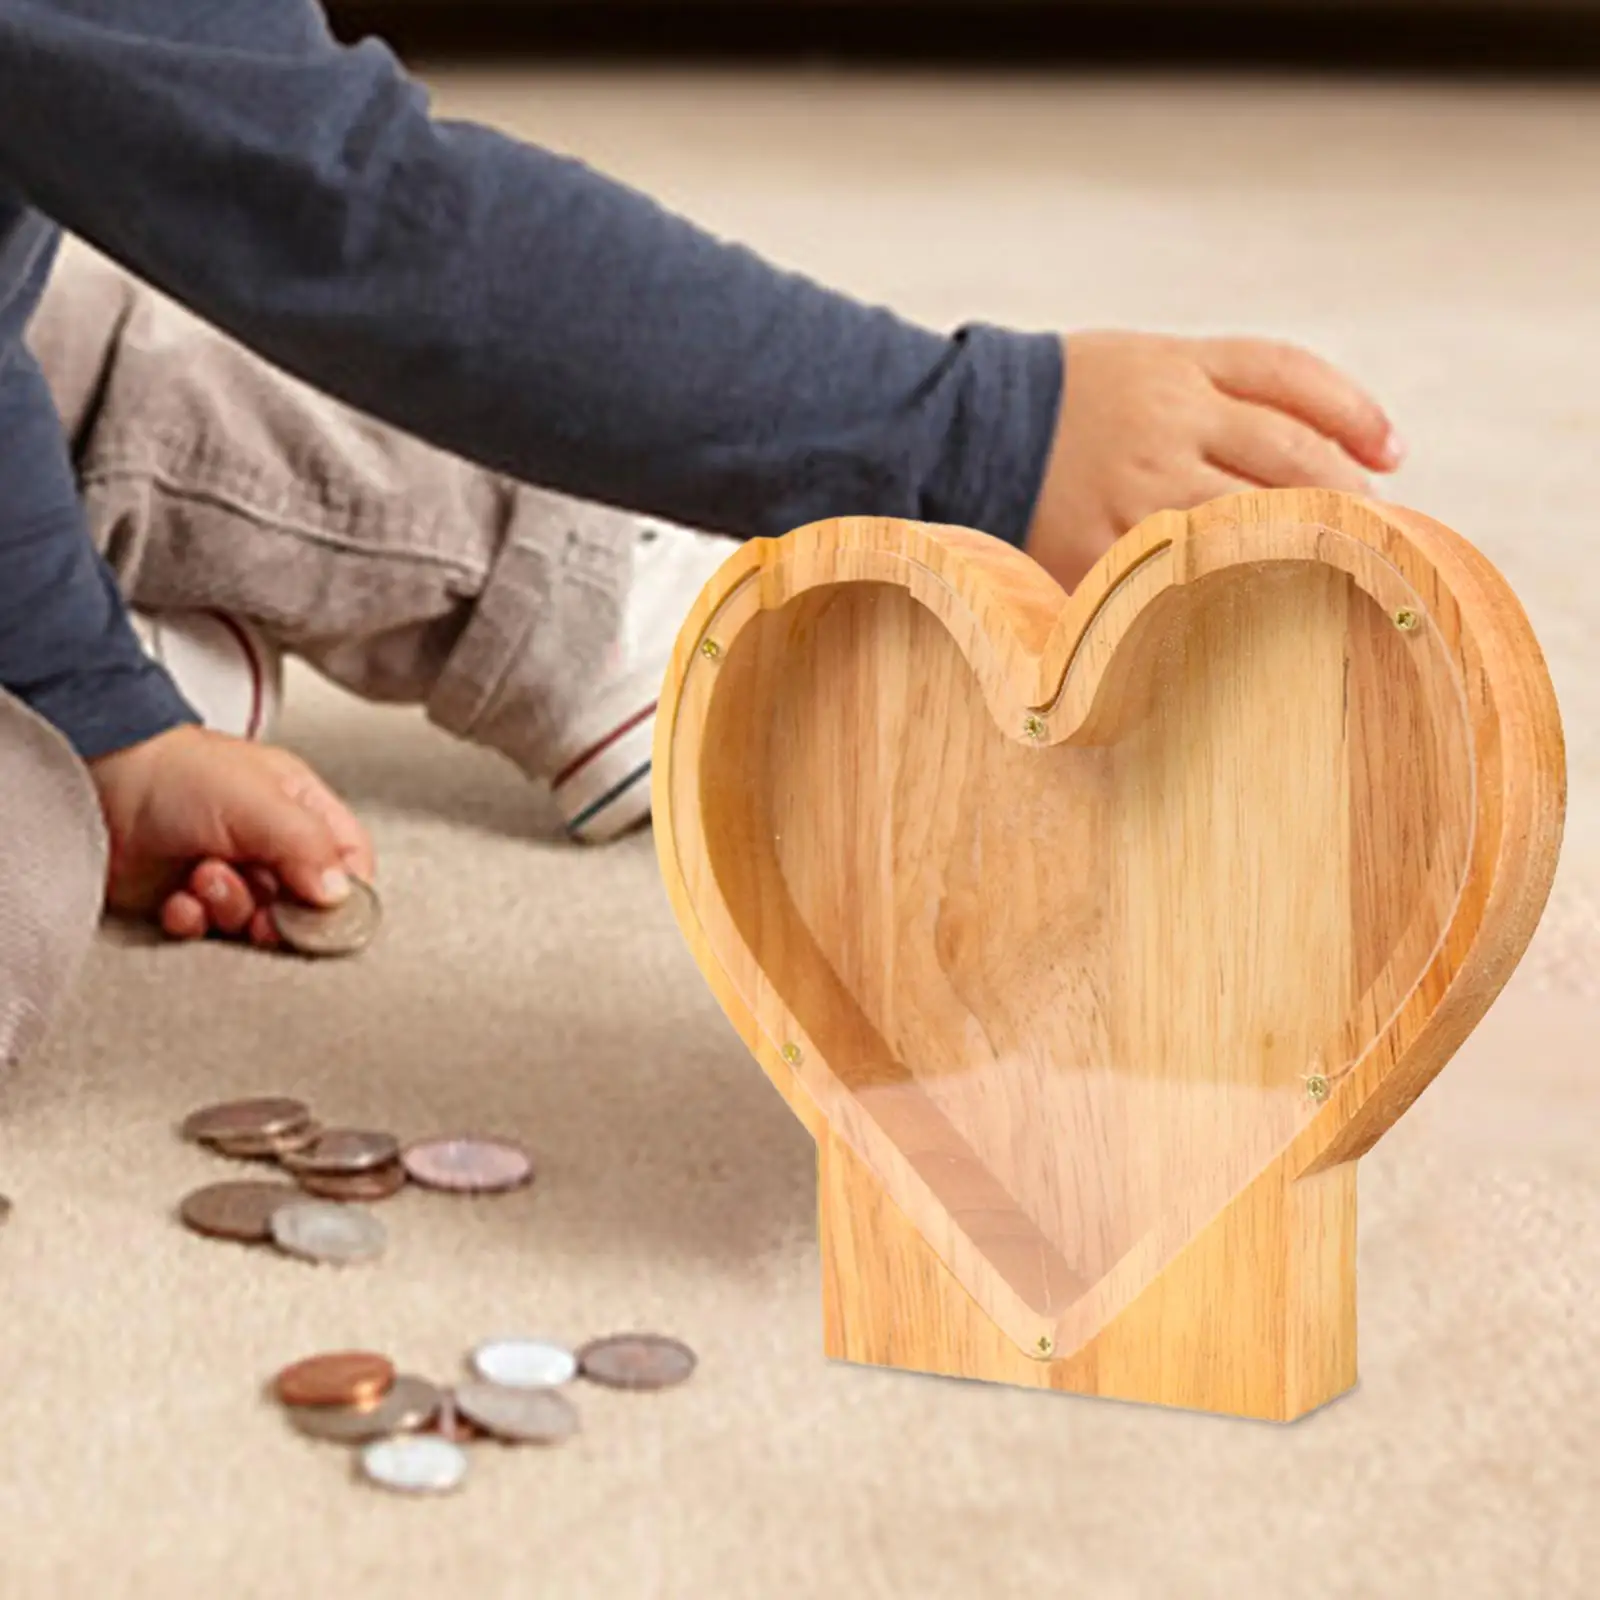 Wooden Piggy Bank Heart Shaped Ornaments Decorative Positive Behavior Saving Box for Bookshelf Tabletop Bedroom Cabinet Office